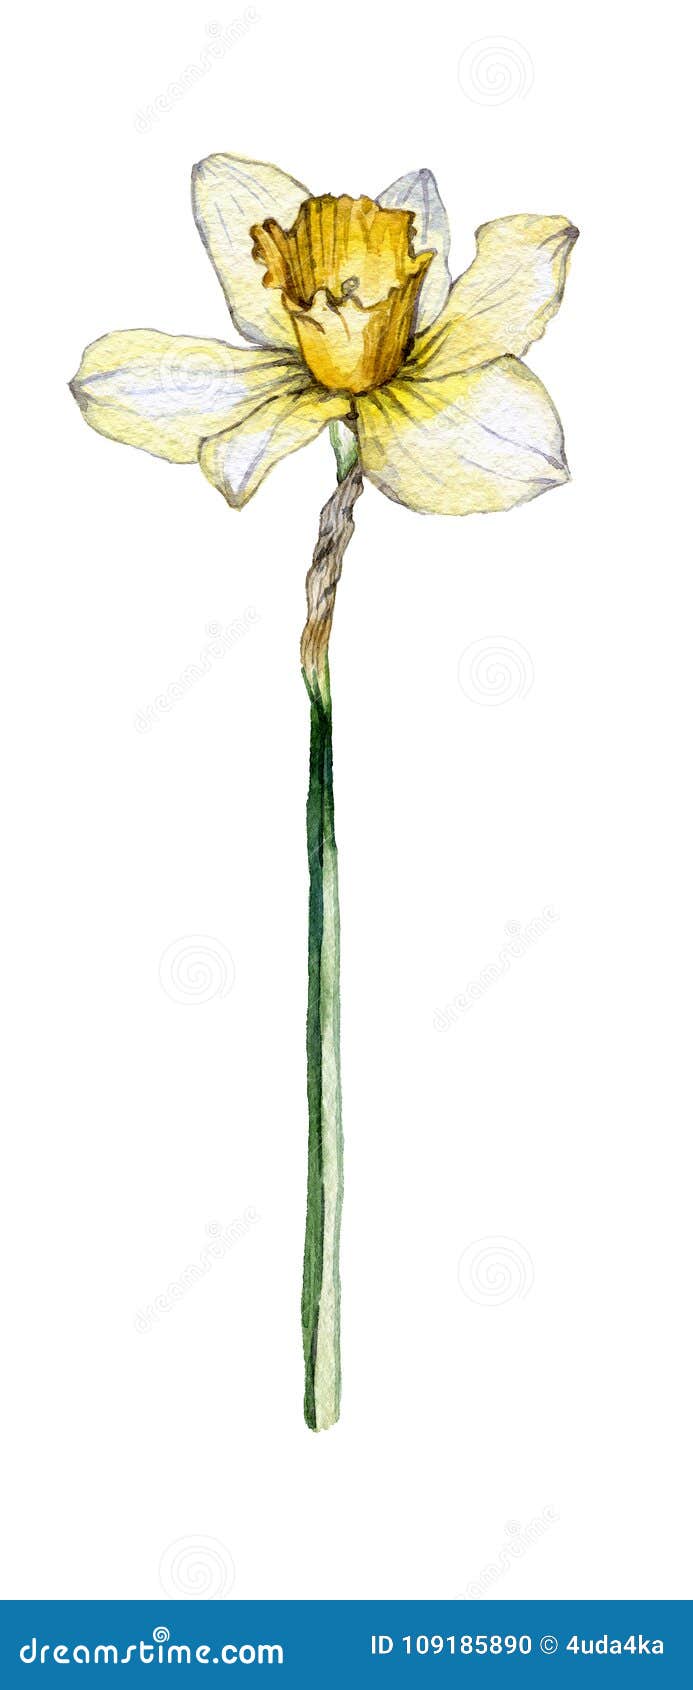 Botanical Illustration of a Daffodil Flower on White Background Stock ...